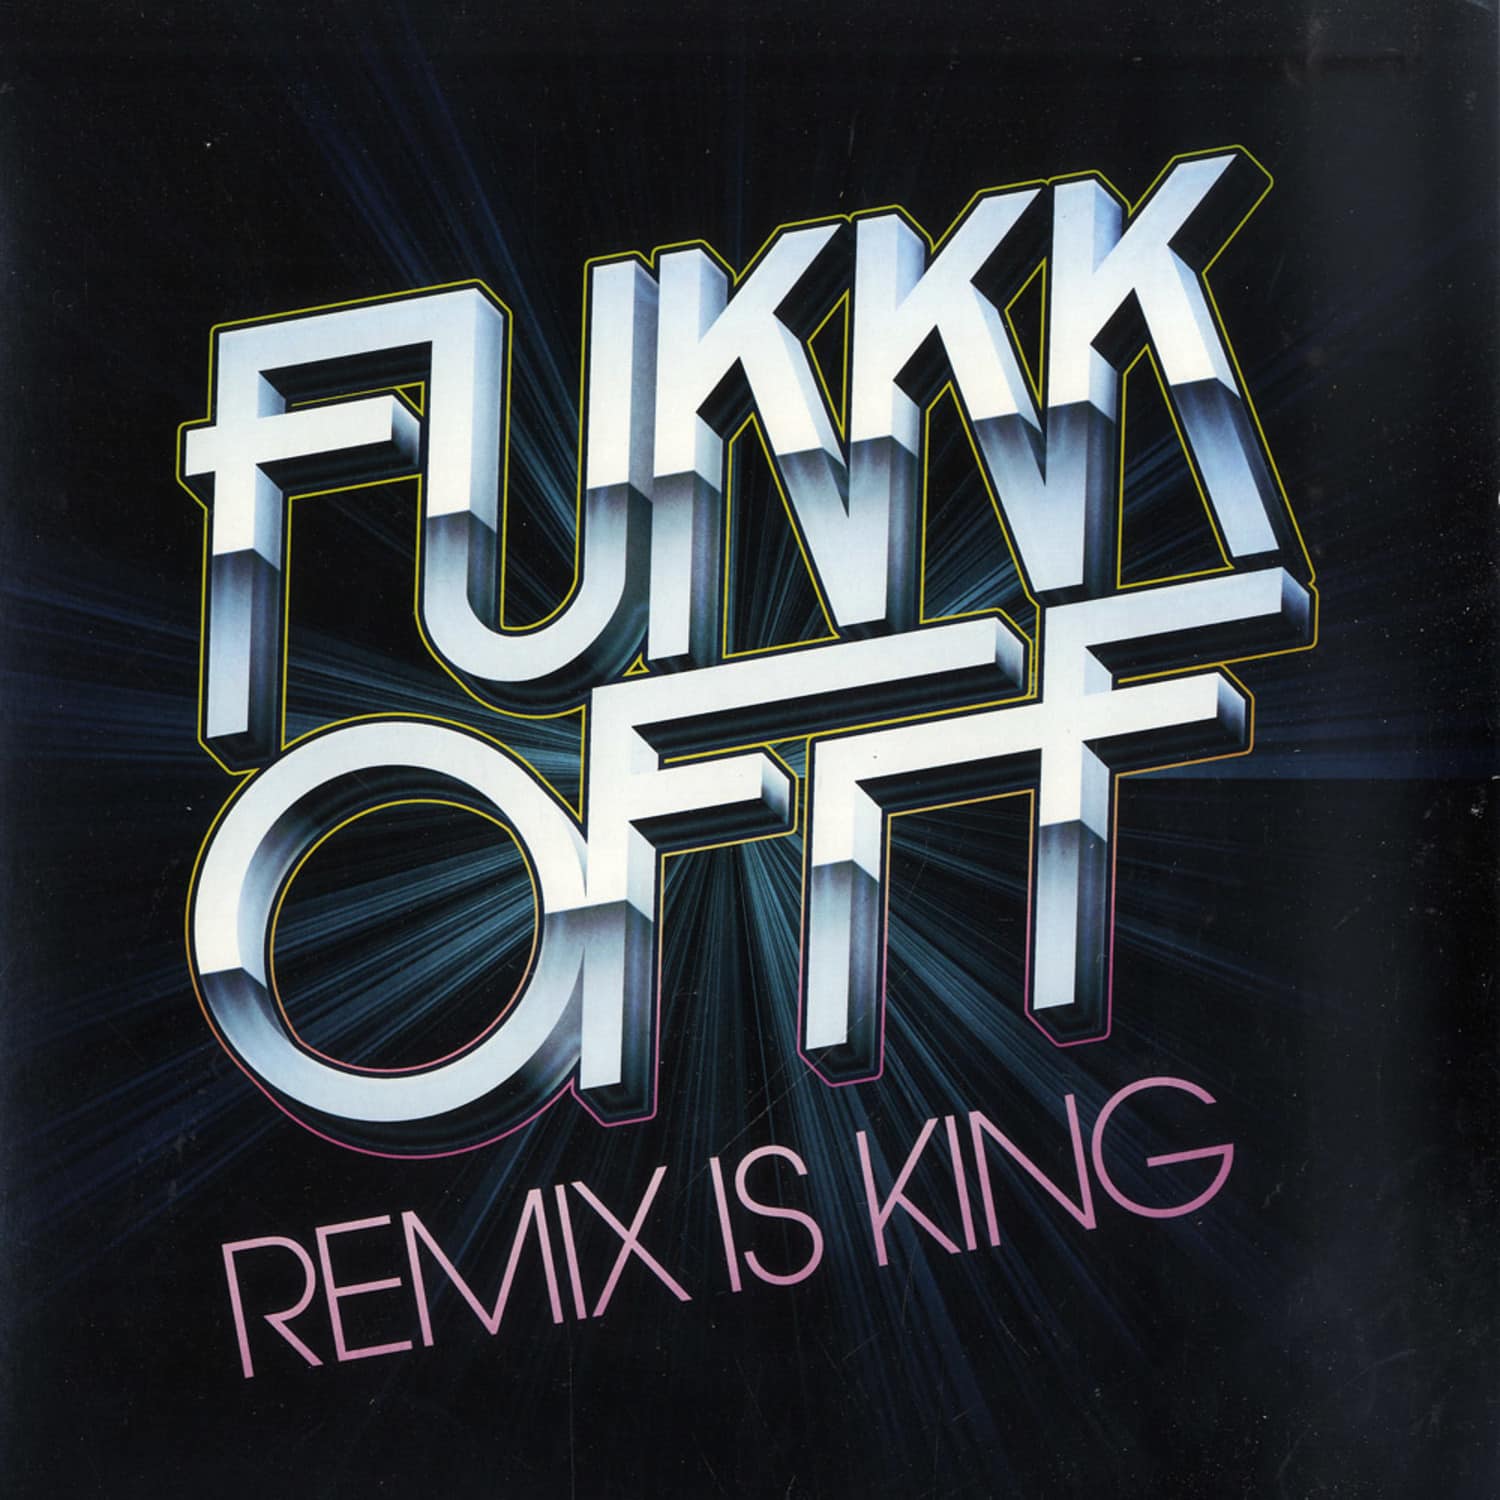 Fukkk Offf - Remix Is King